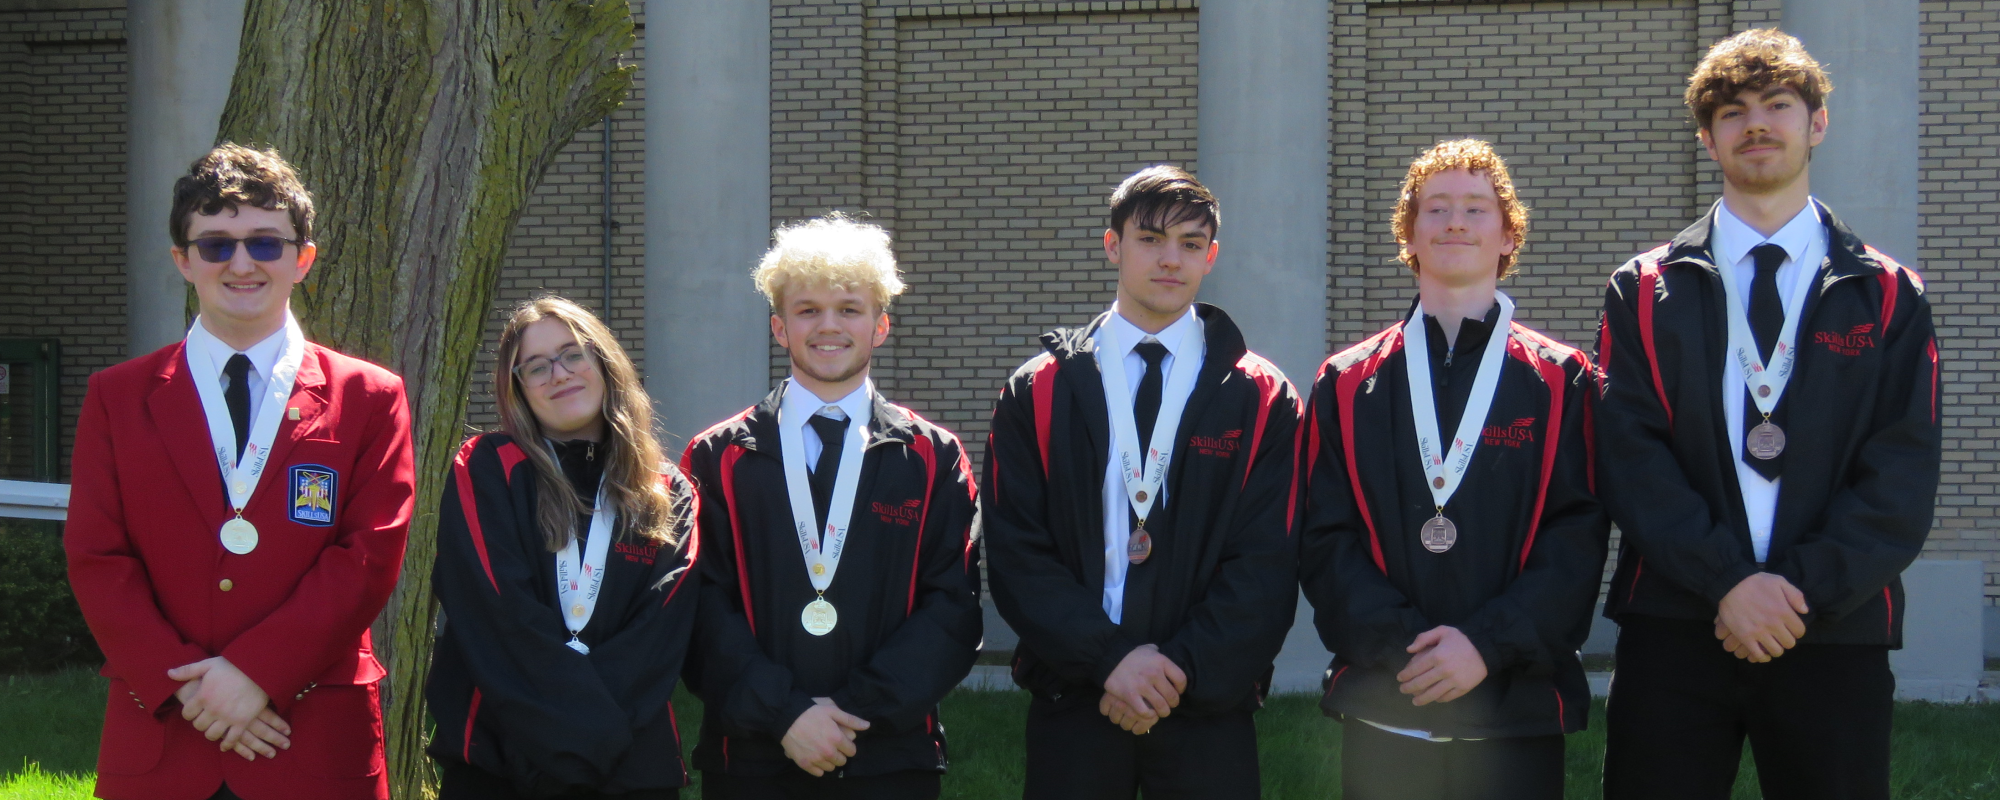 Students stand in line medals around their necks.